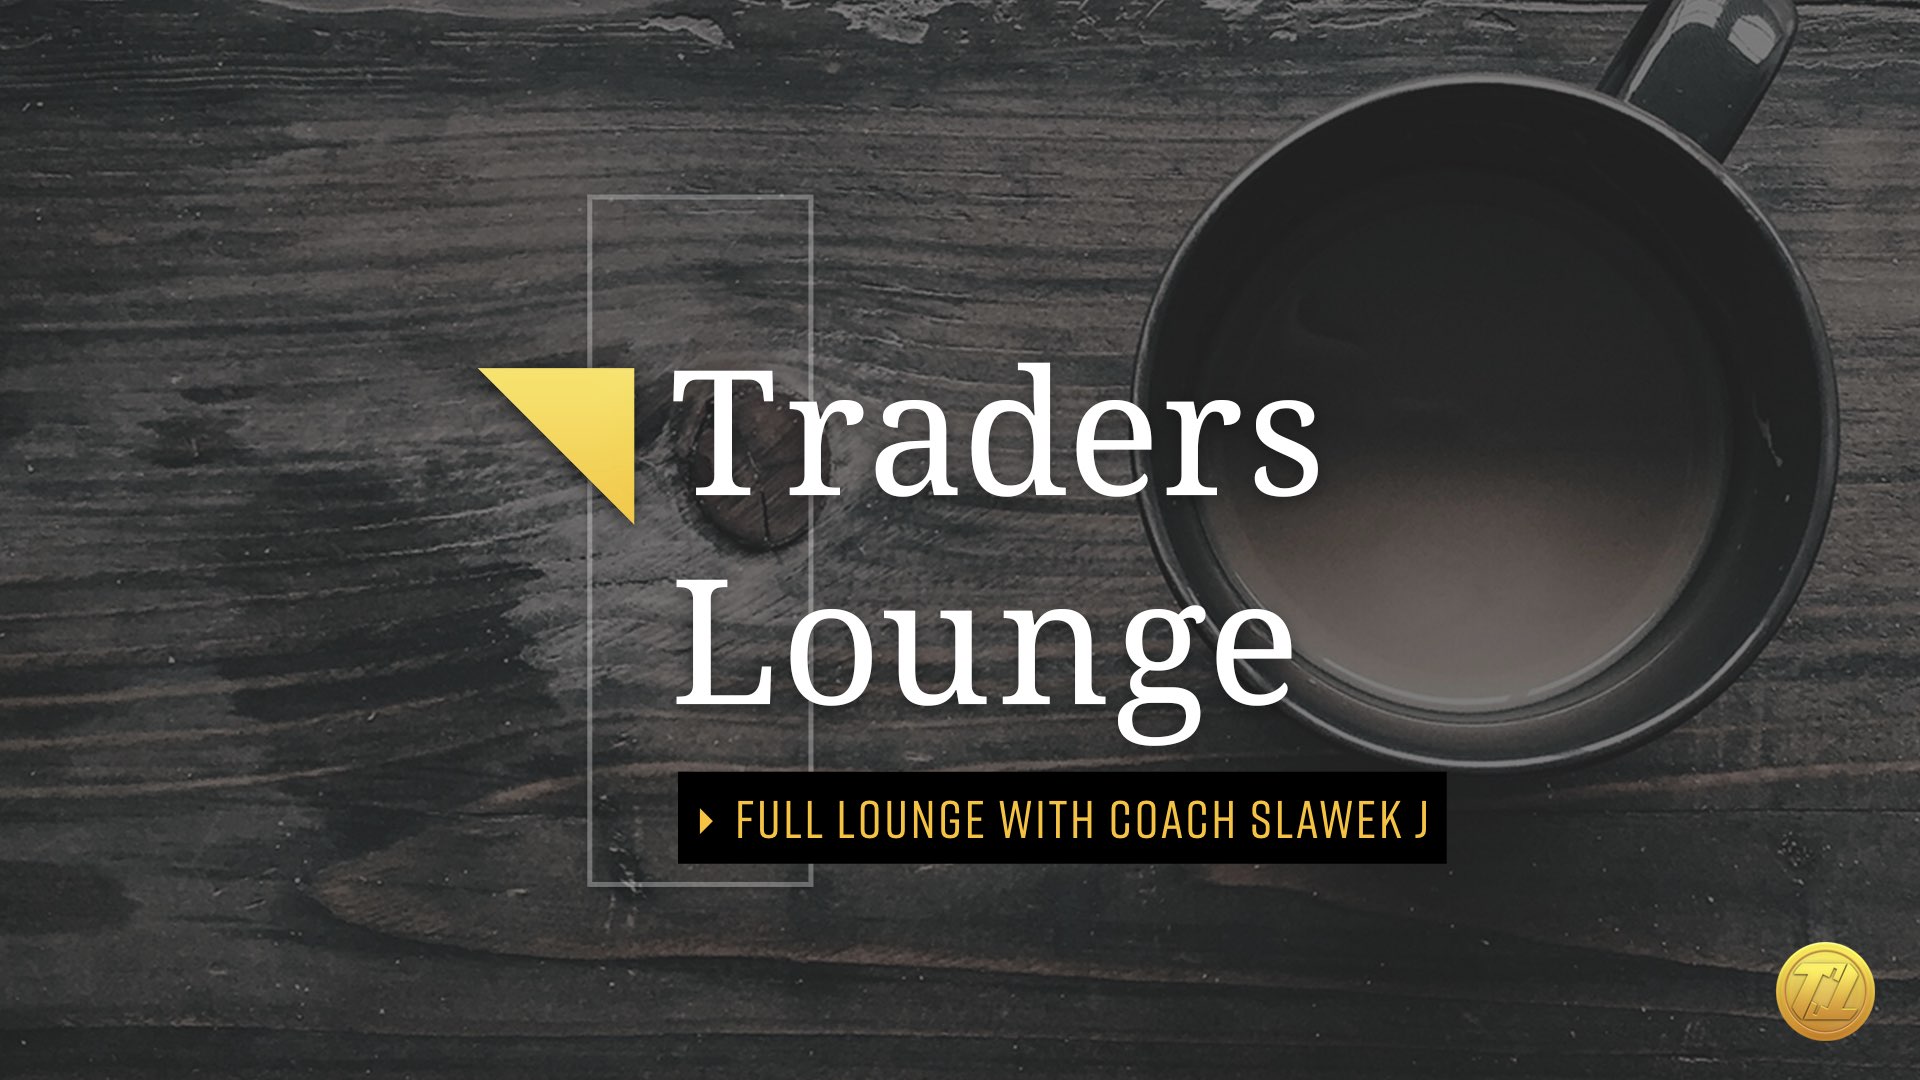 Traders Lounge December 12th, 2019: Full Lounge with Coach Slawek J